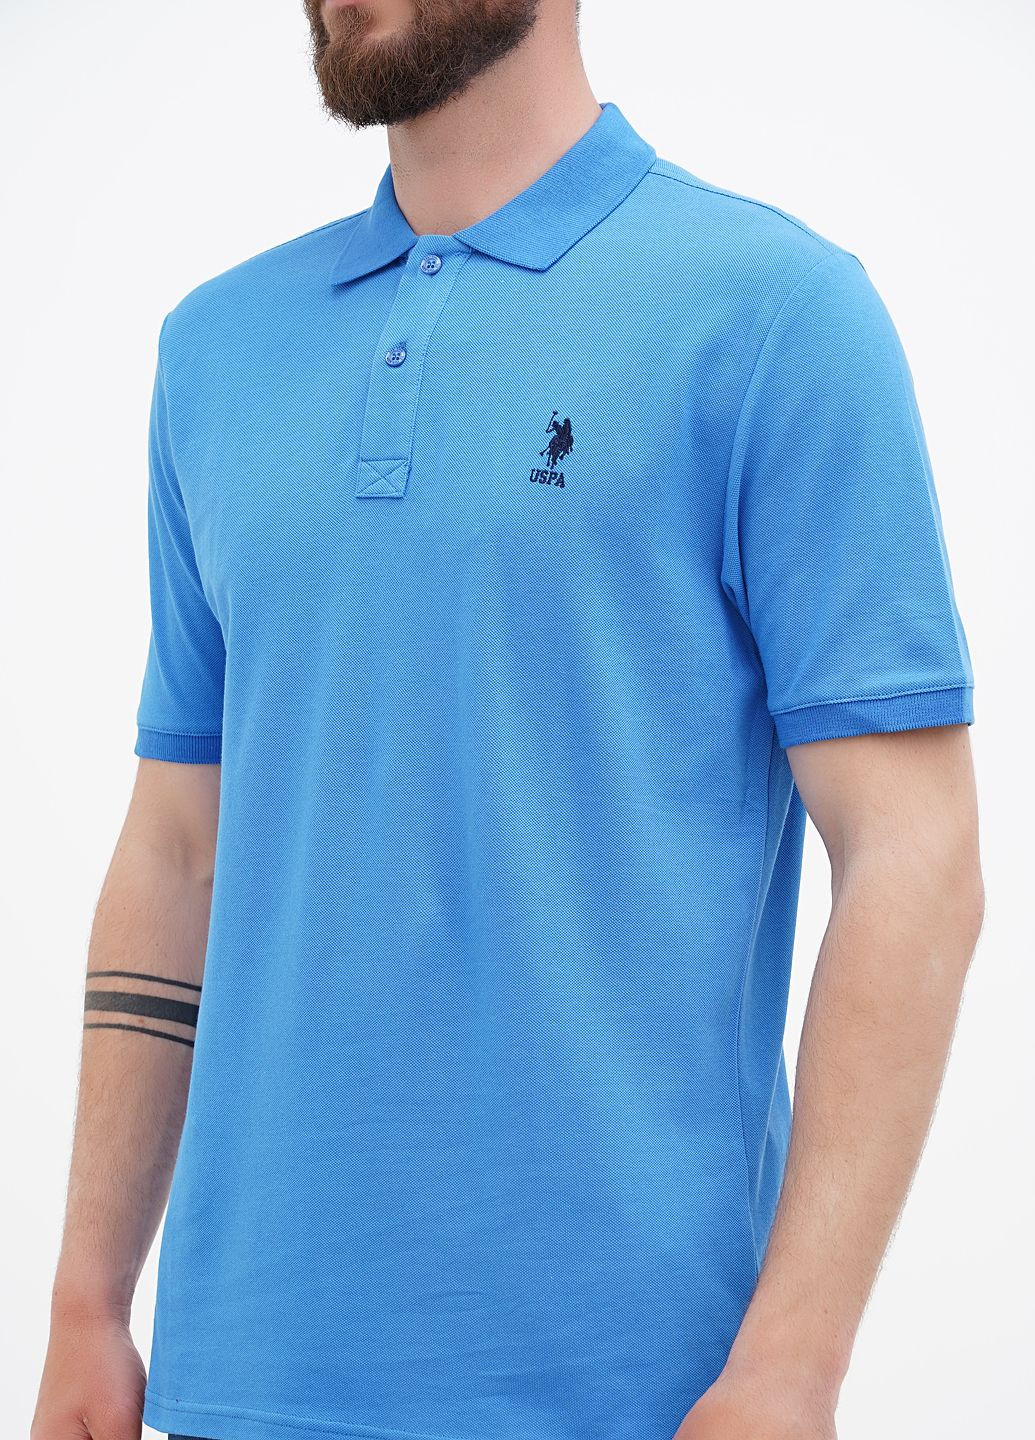 Синяя футболка-футболка поло u.s. polo assn мужская для мужчин U.S. Polo Assn.